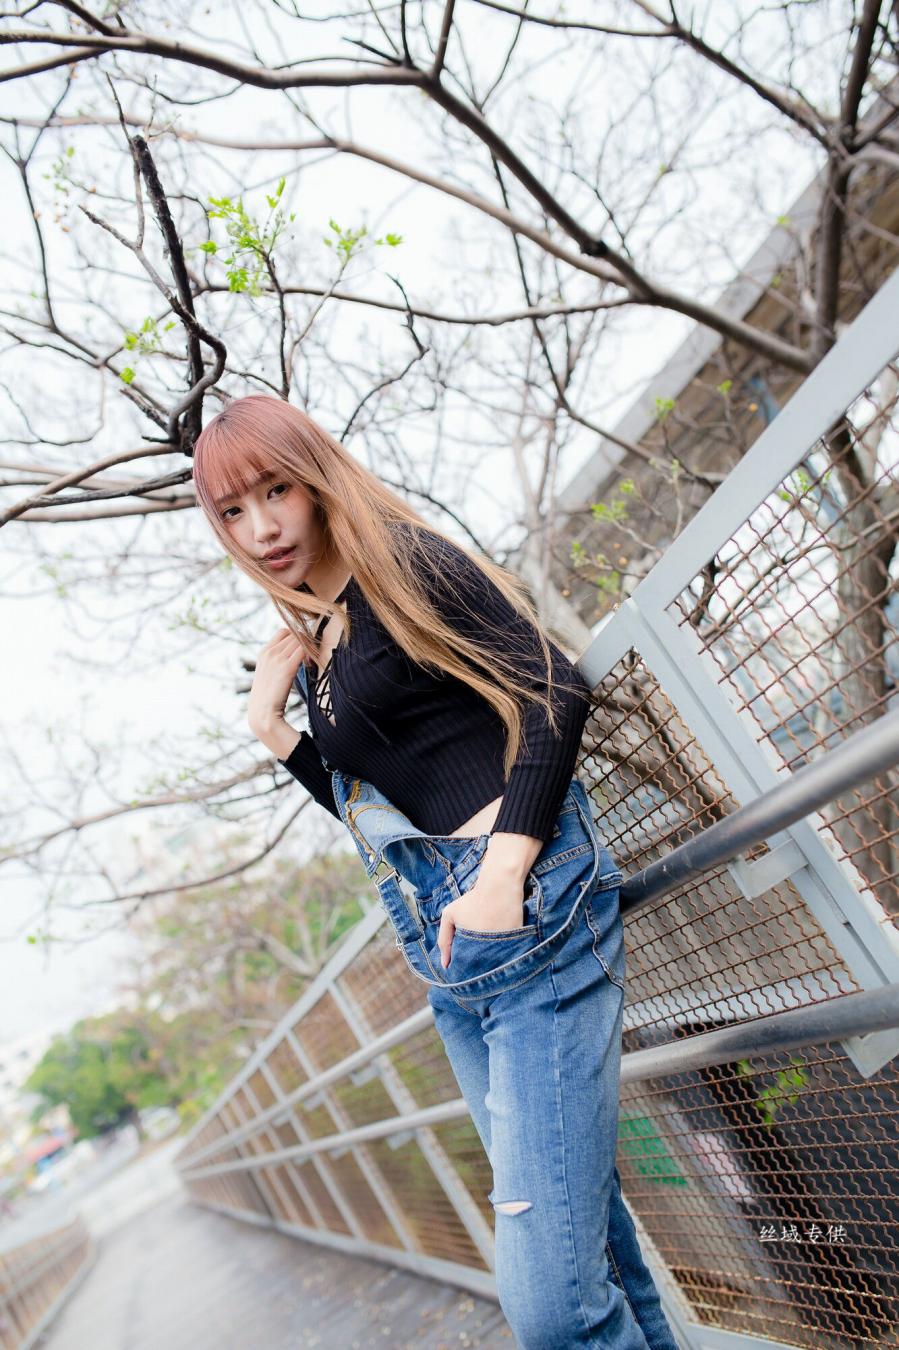 Taiwan Pretty Girl Bi Bi Er Jean Hot Pants Pictures